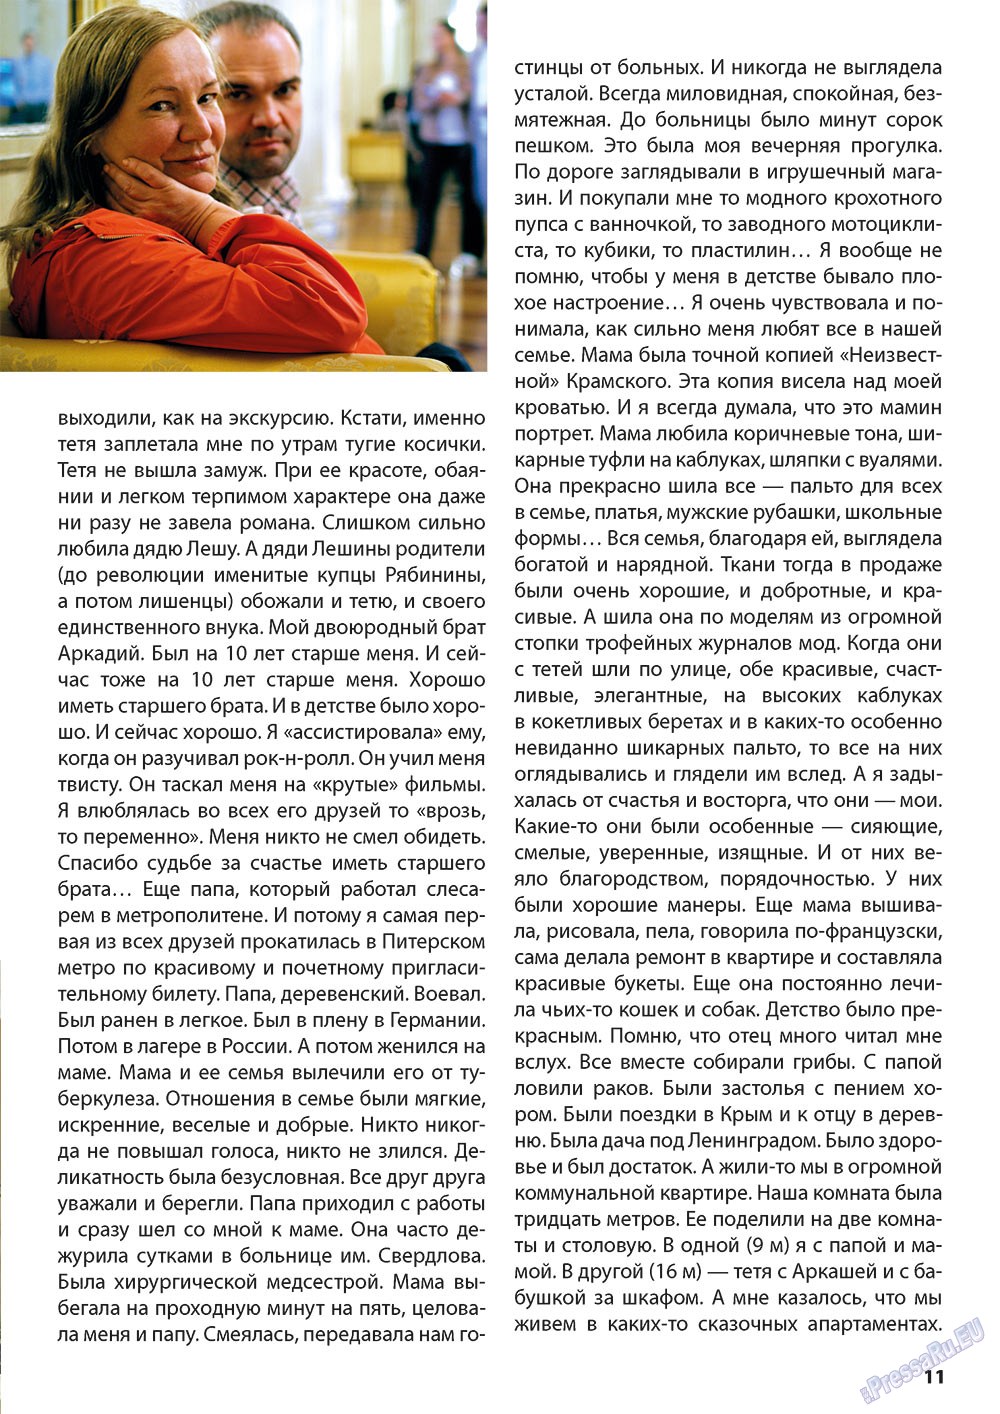 Wadim, журнал. 2013 №1 стр.11